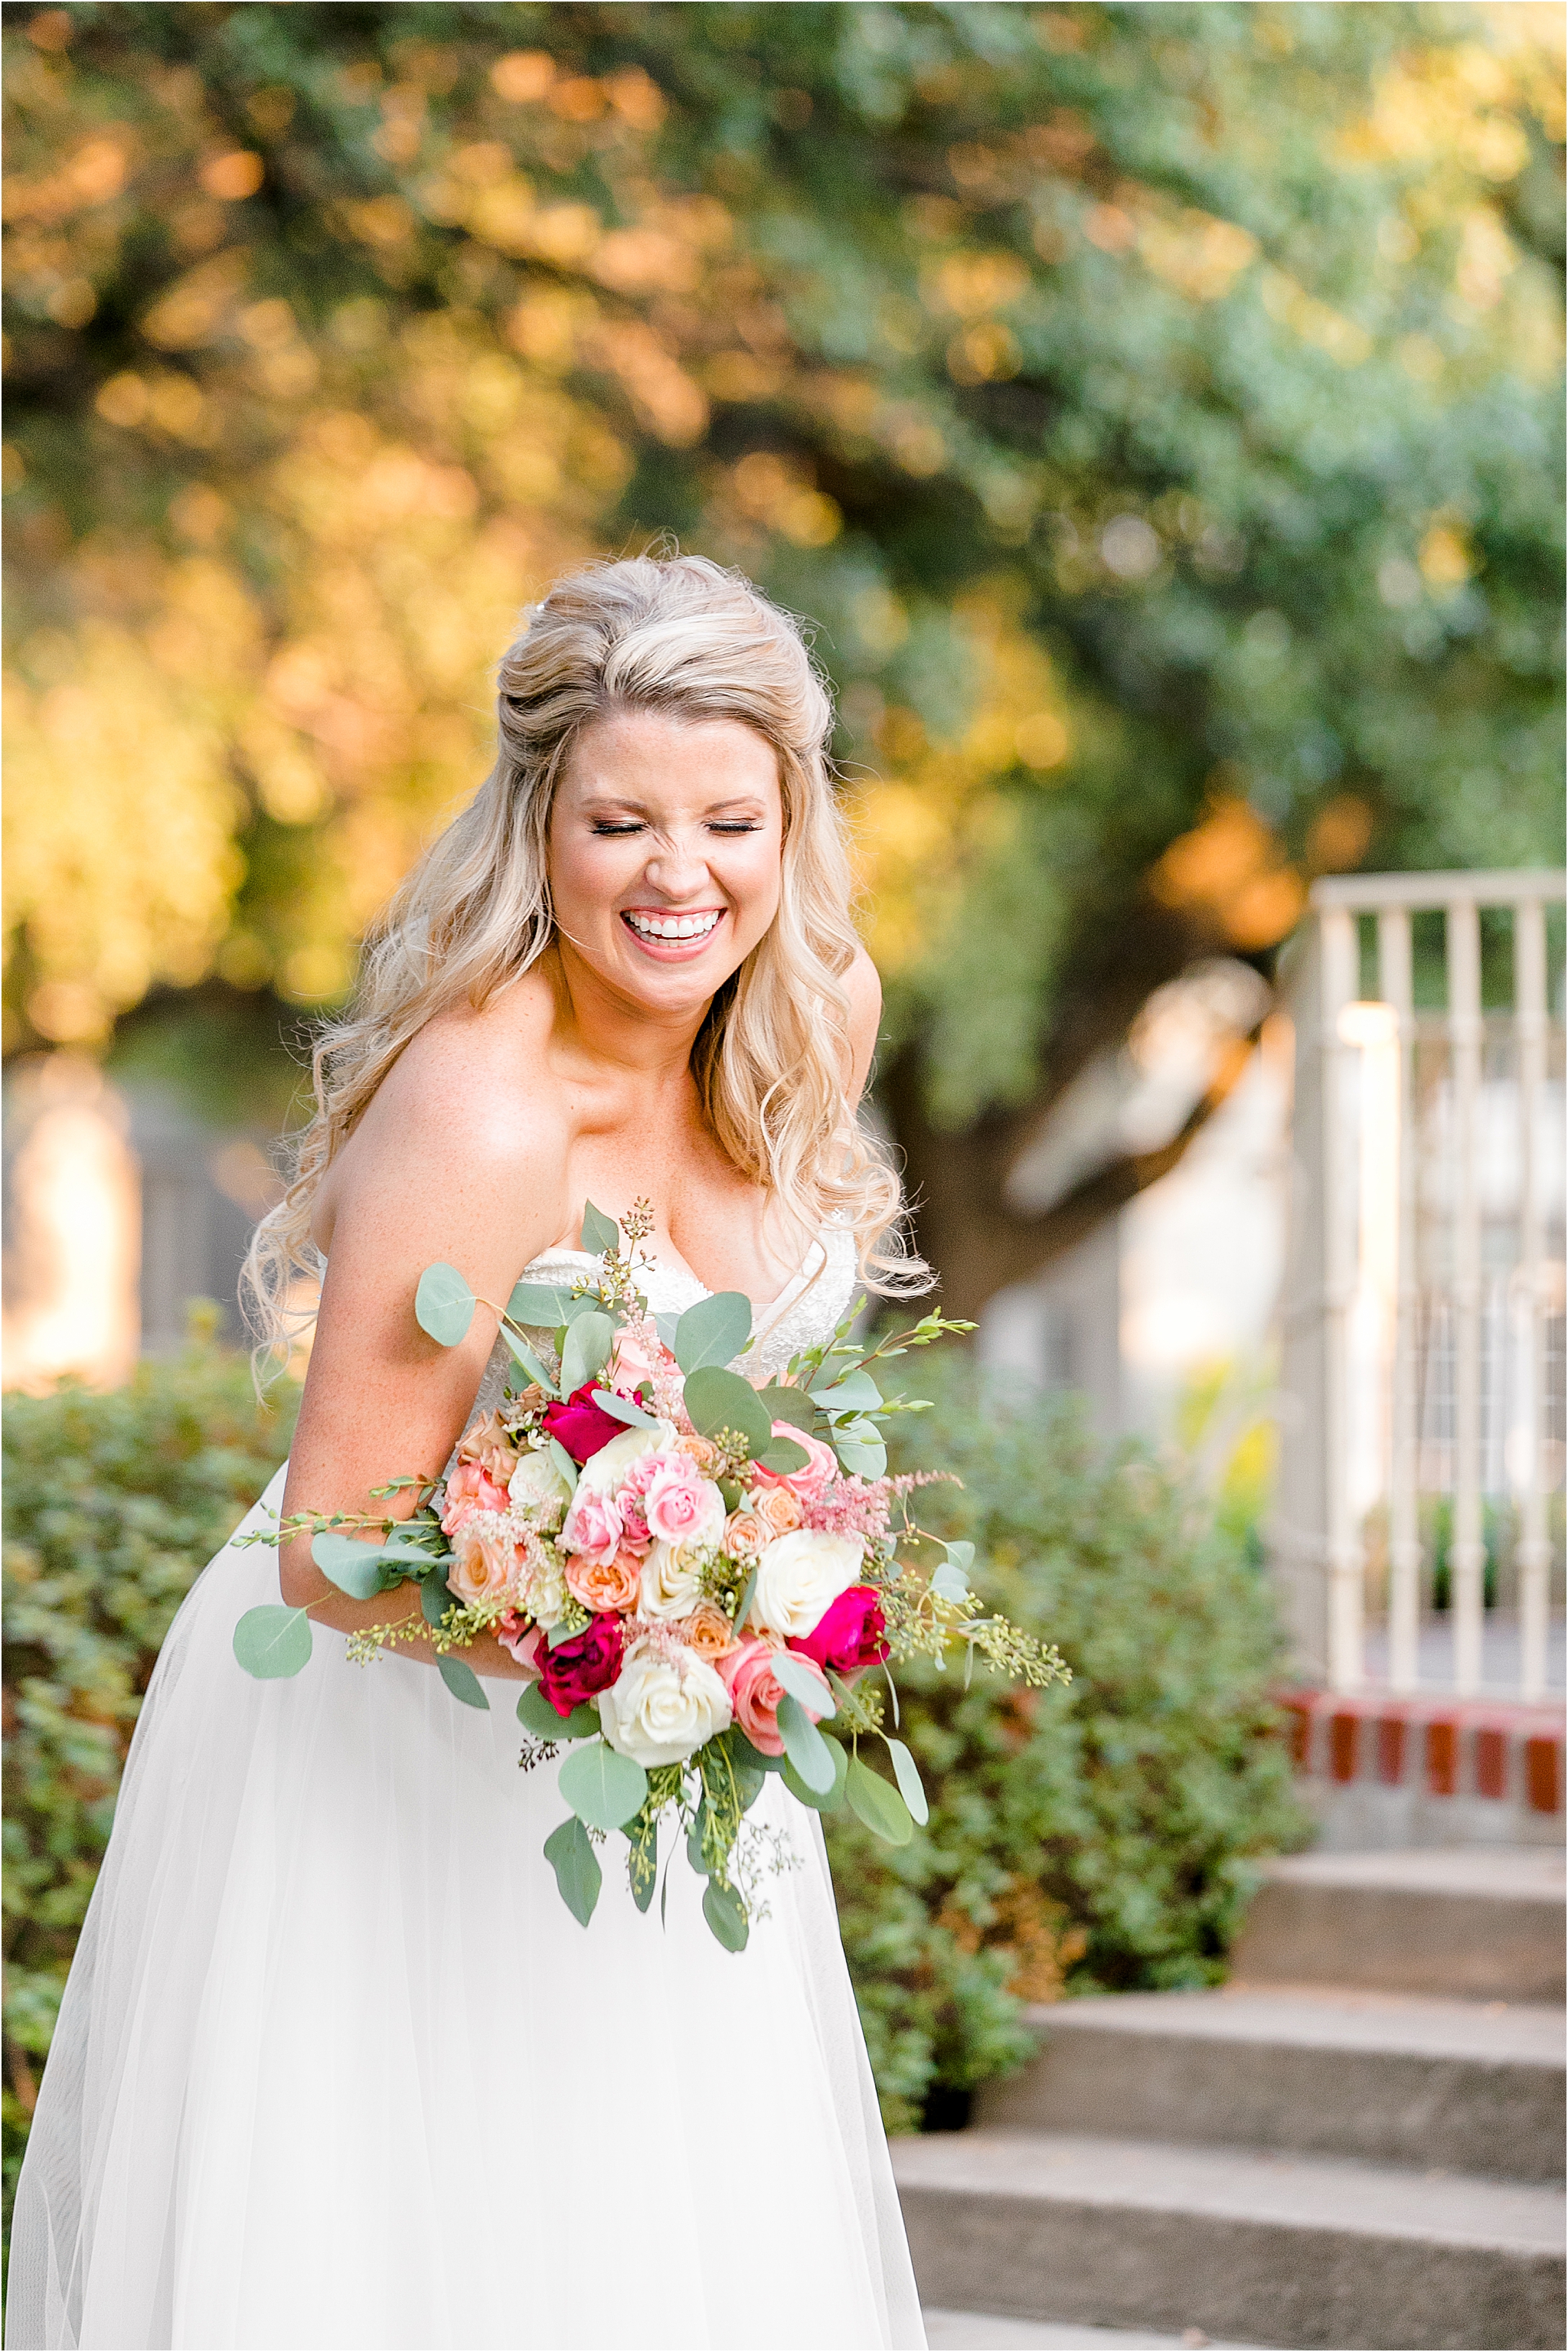 Flippen Park Bridal Portraits in Dallas TX by DFW Wedding Photographer Jillian Hogan 